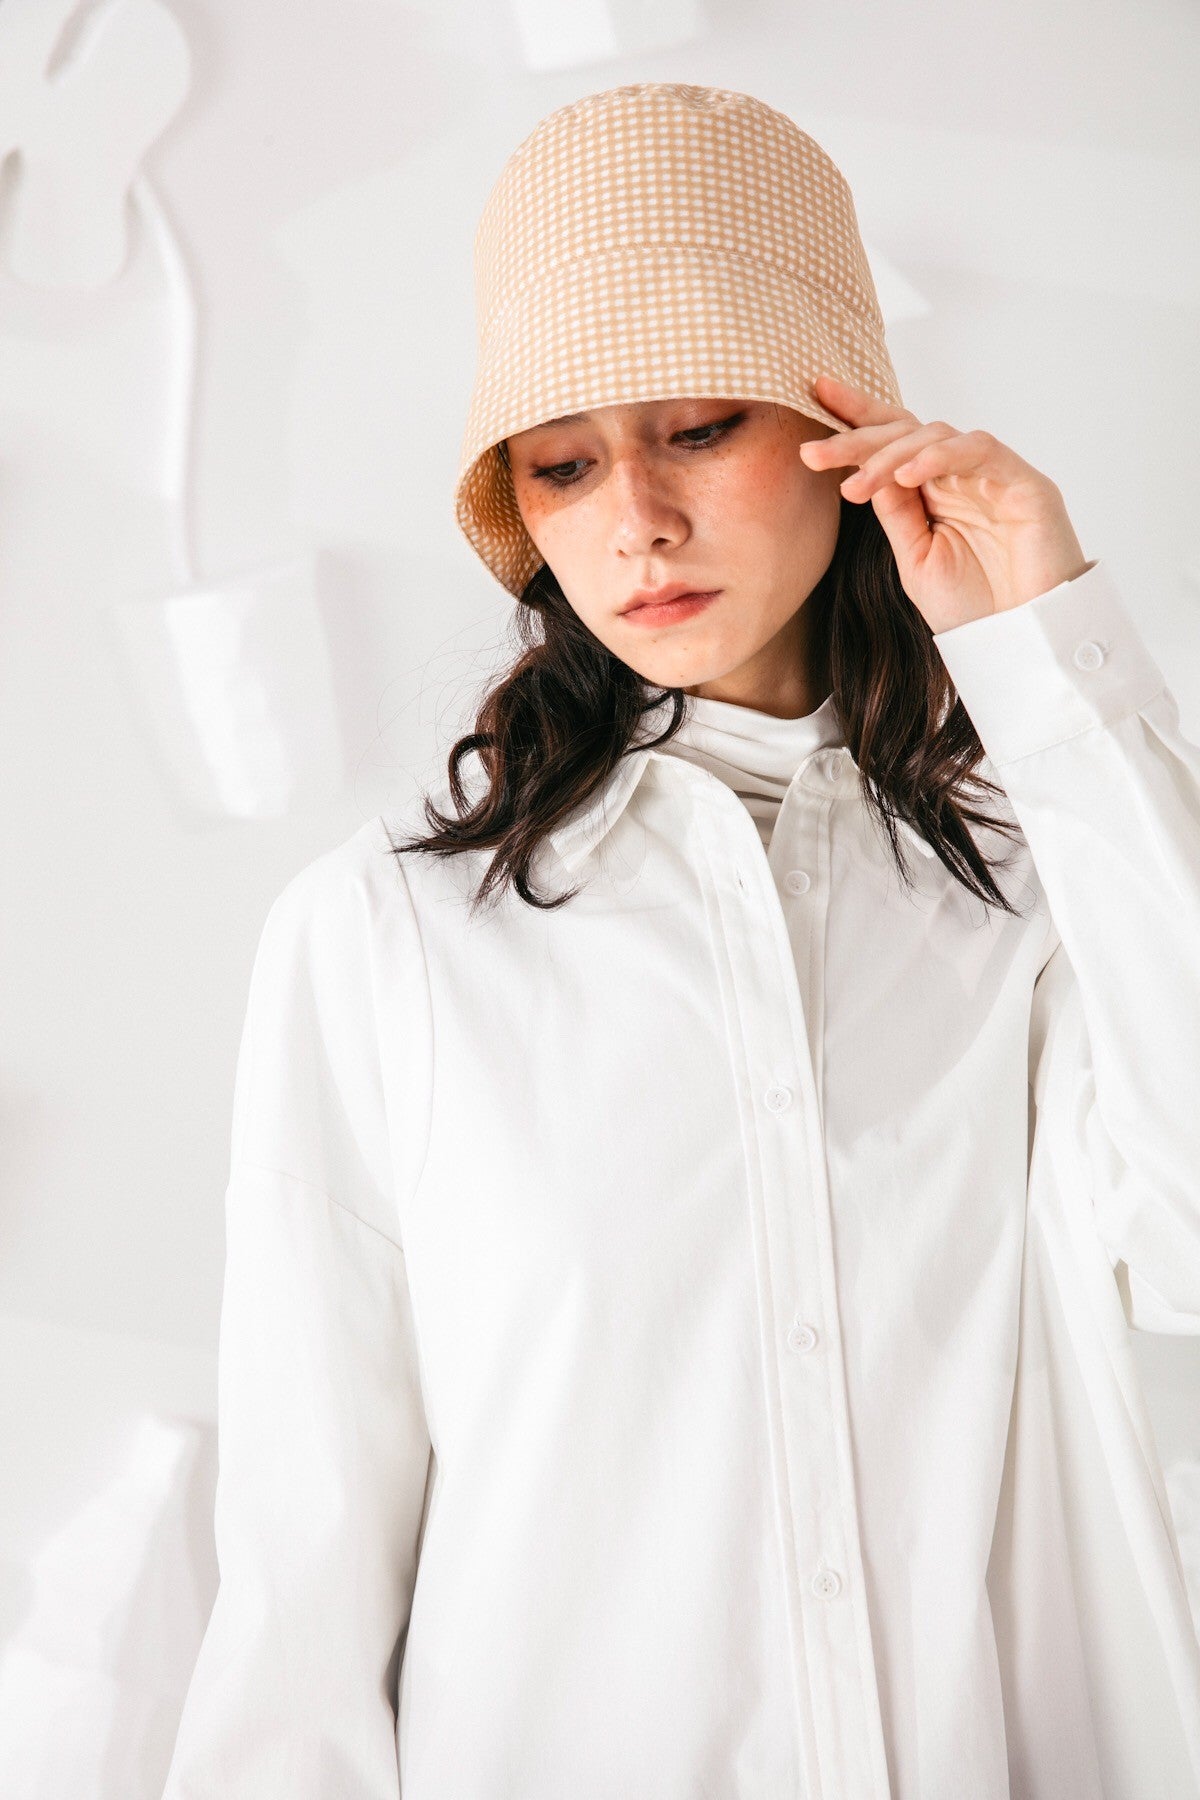 SKYE San Francisco SF shop ethical modern minimalist quality women clothing fashion Brigitte Tunic Shirt white 3